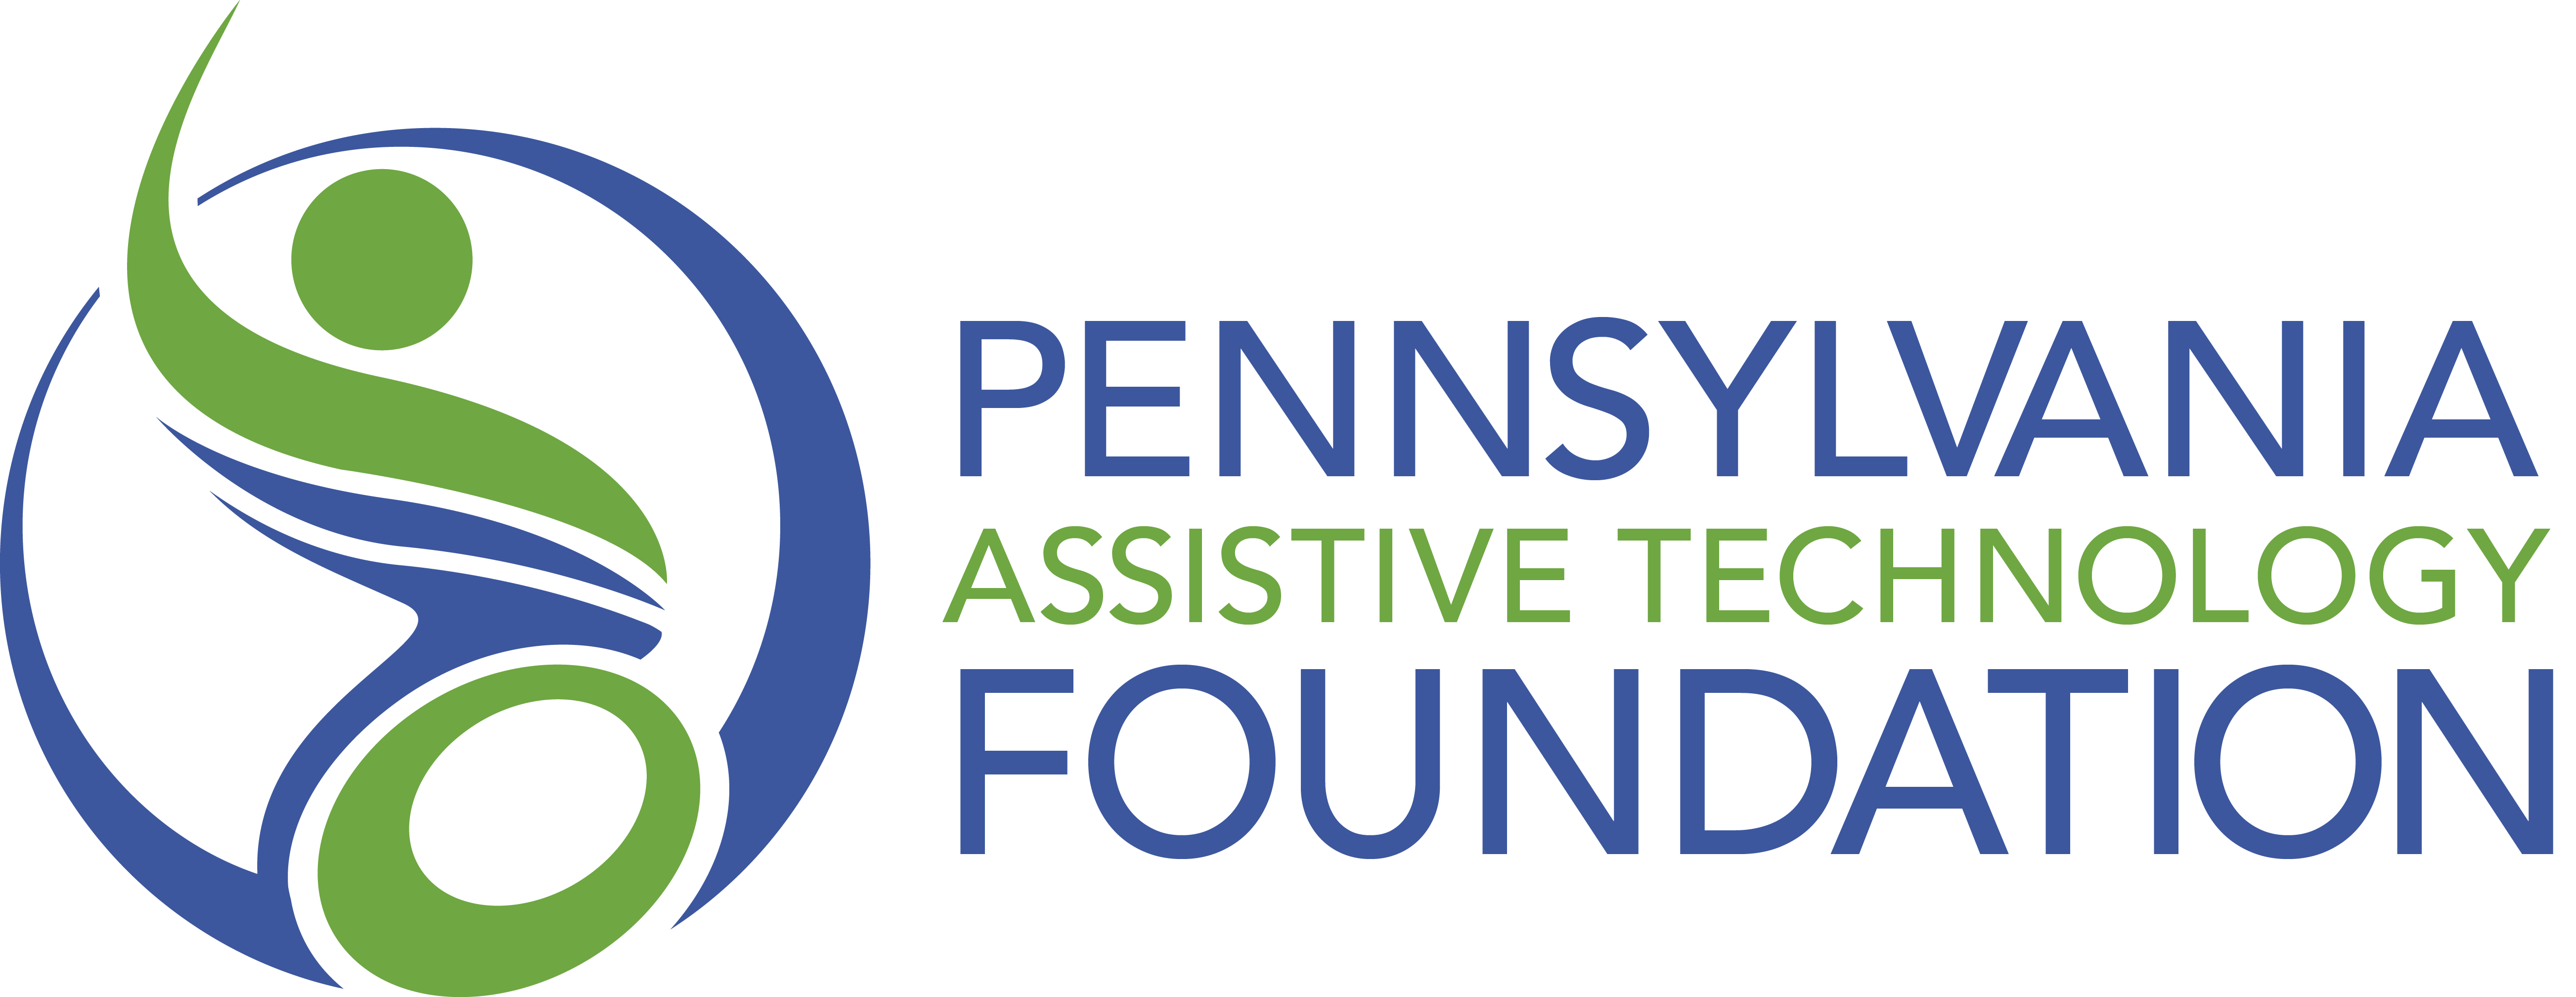 Pennsylvania Assitive Technology Foundation logo